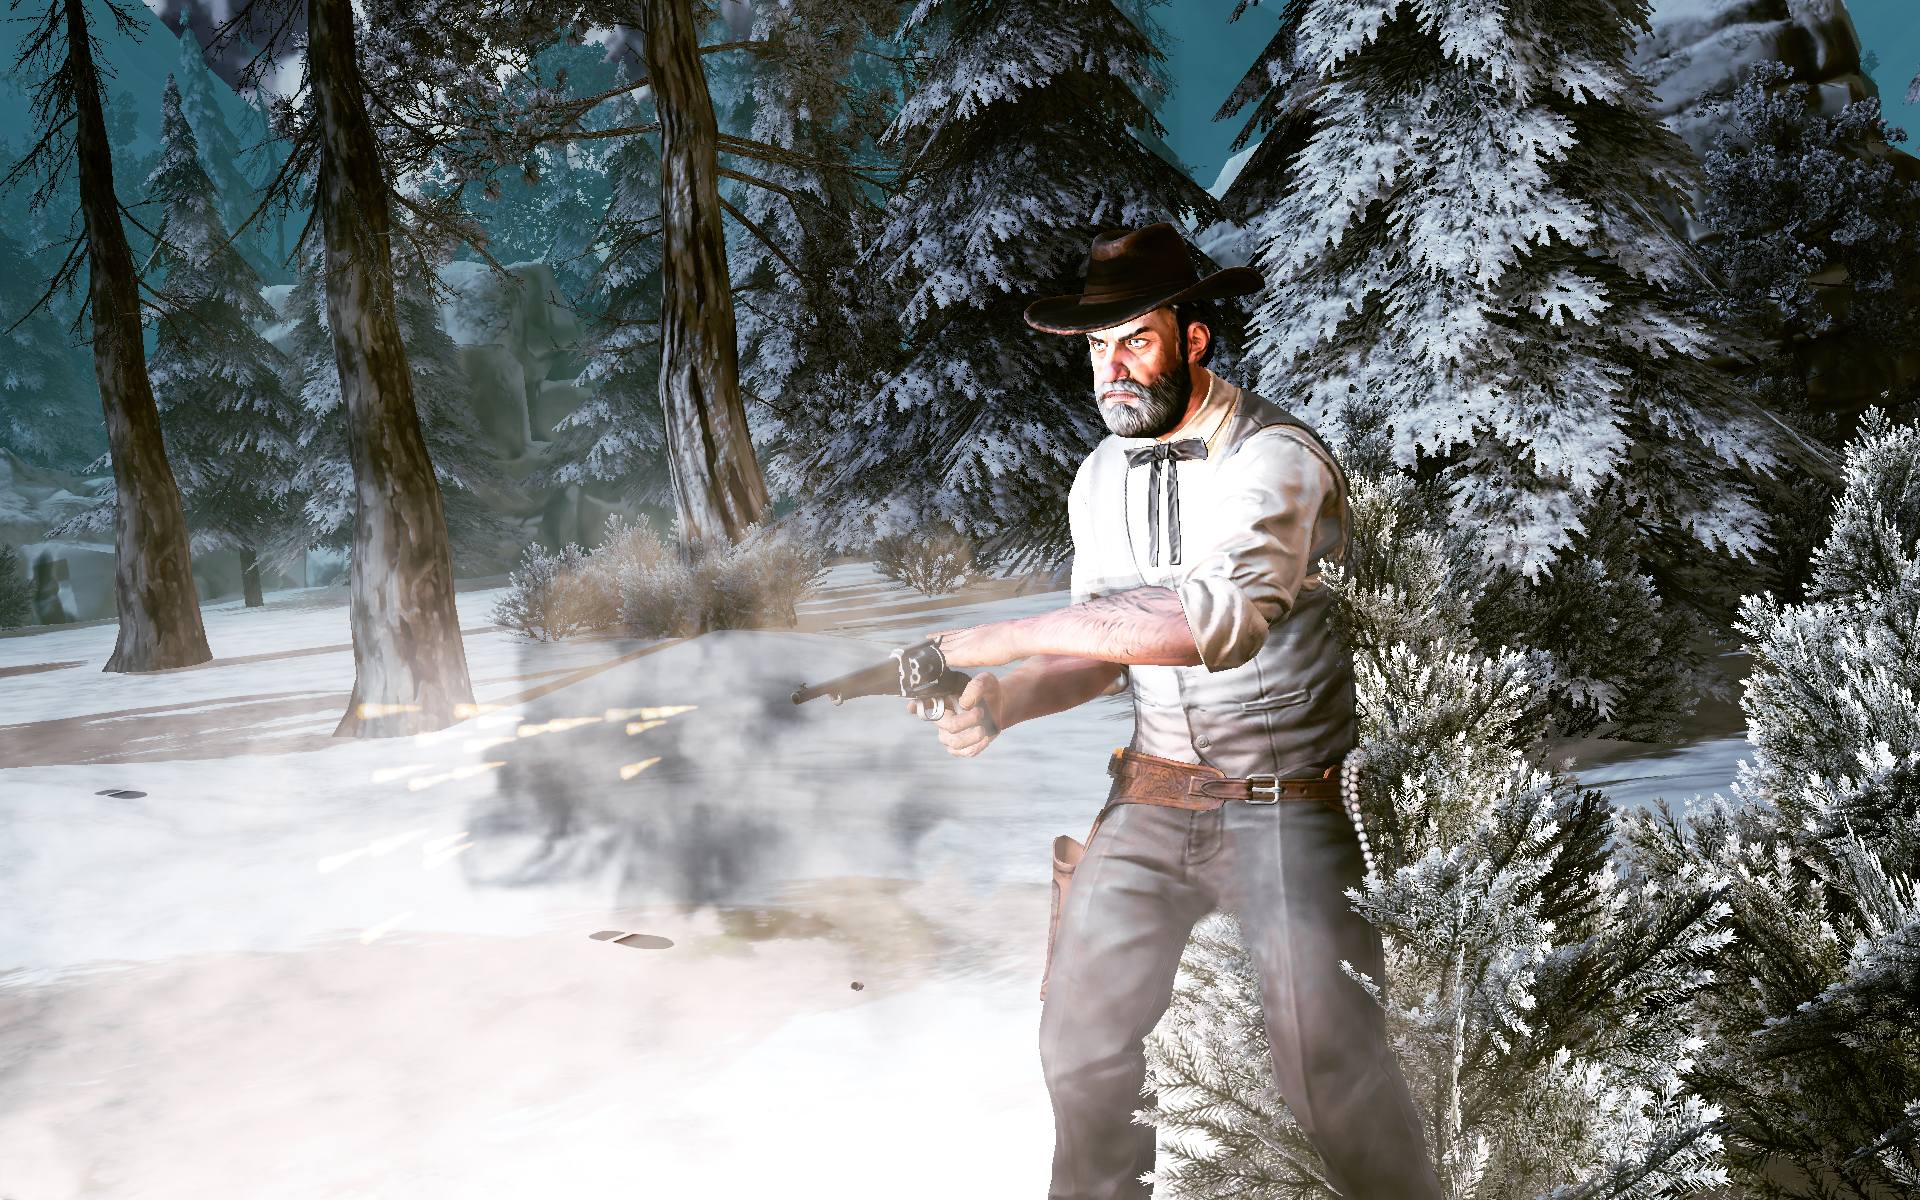 The Feud: Wild West Tactics screenshot